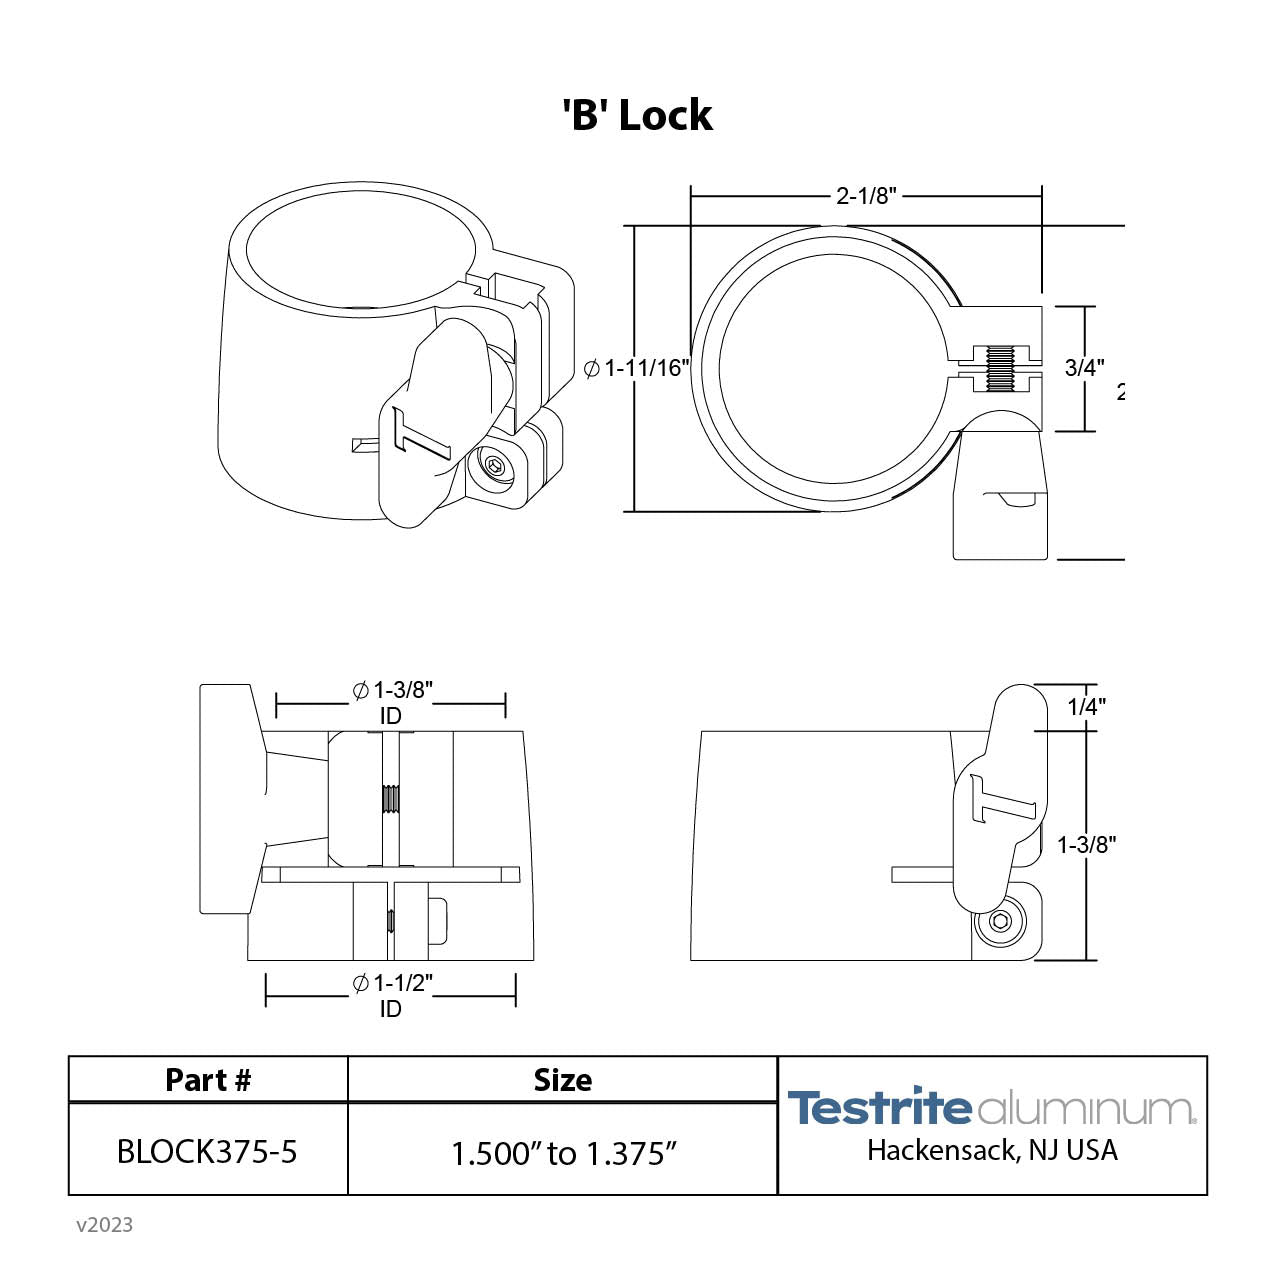 Spec Card B Split Collar Lock 1-1/2" to 1-3/8", 1.5" to 1.375" Telescopic tubing clamp